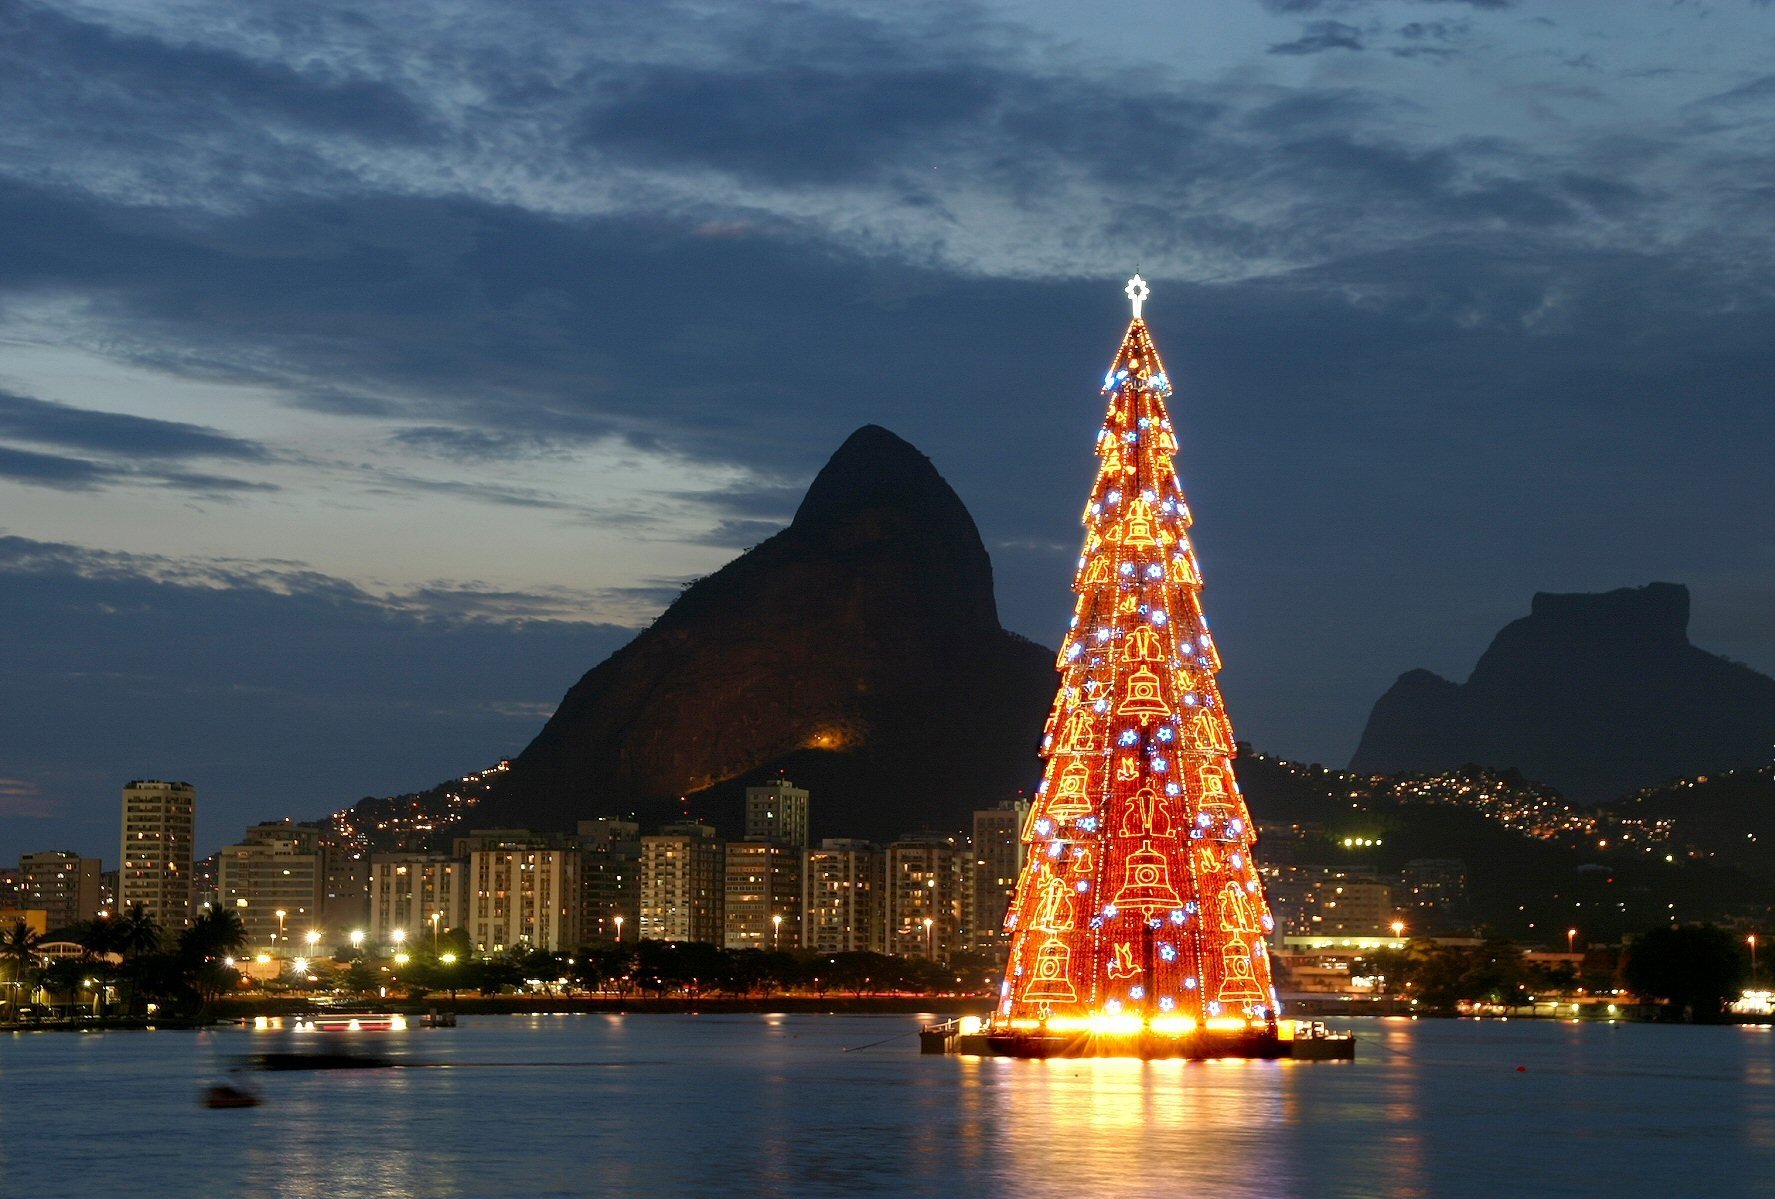 Какая зима в бразилии. Елка в Рио де Жанейро. Рождественская елка в Рио де Жанейро. Плавучая елка в Рио де Жанейро. Рио-де-Жанейро, Бразилия елка.